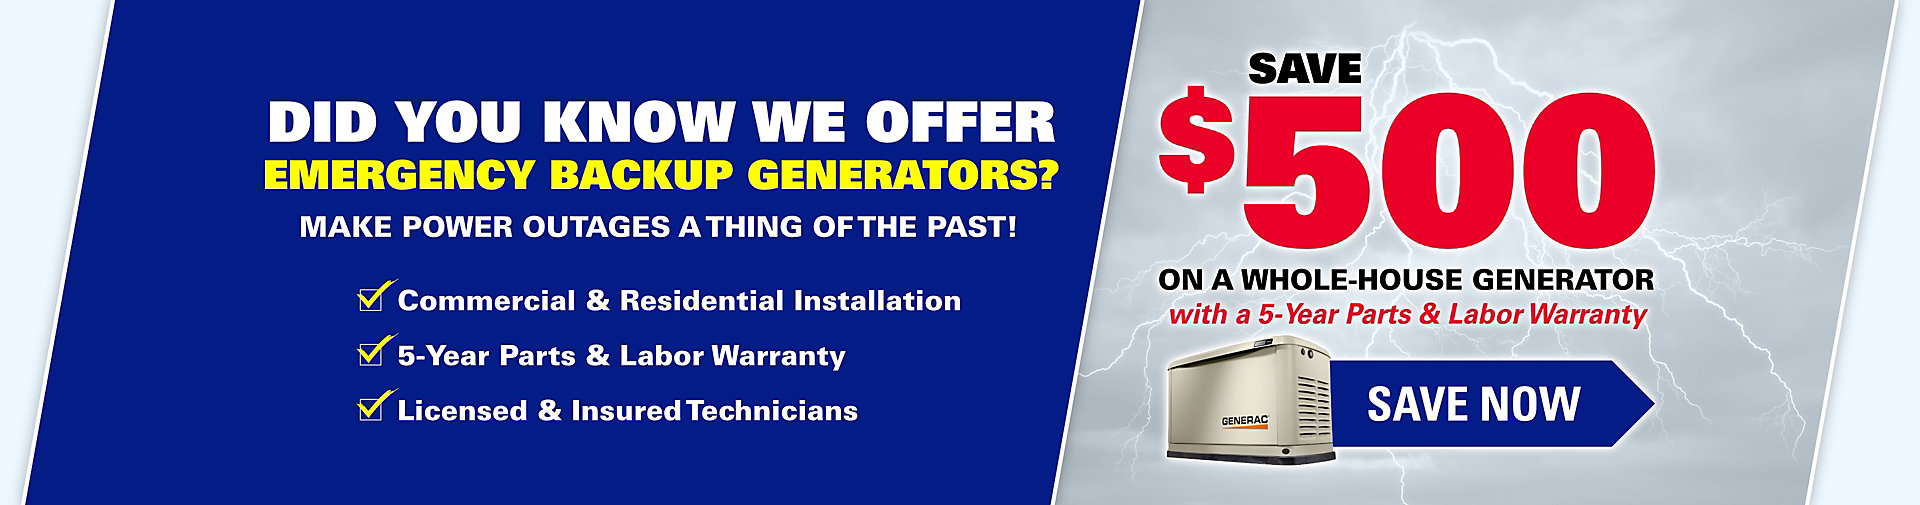 Save $500 on a Whole House Backup Generator